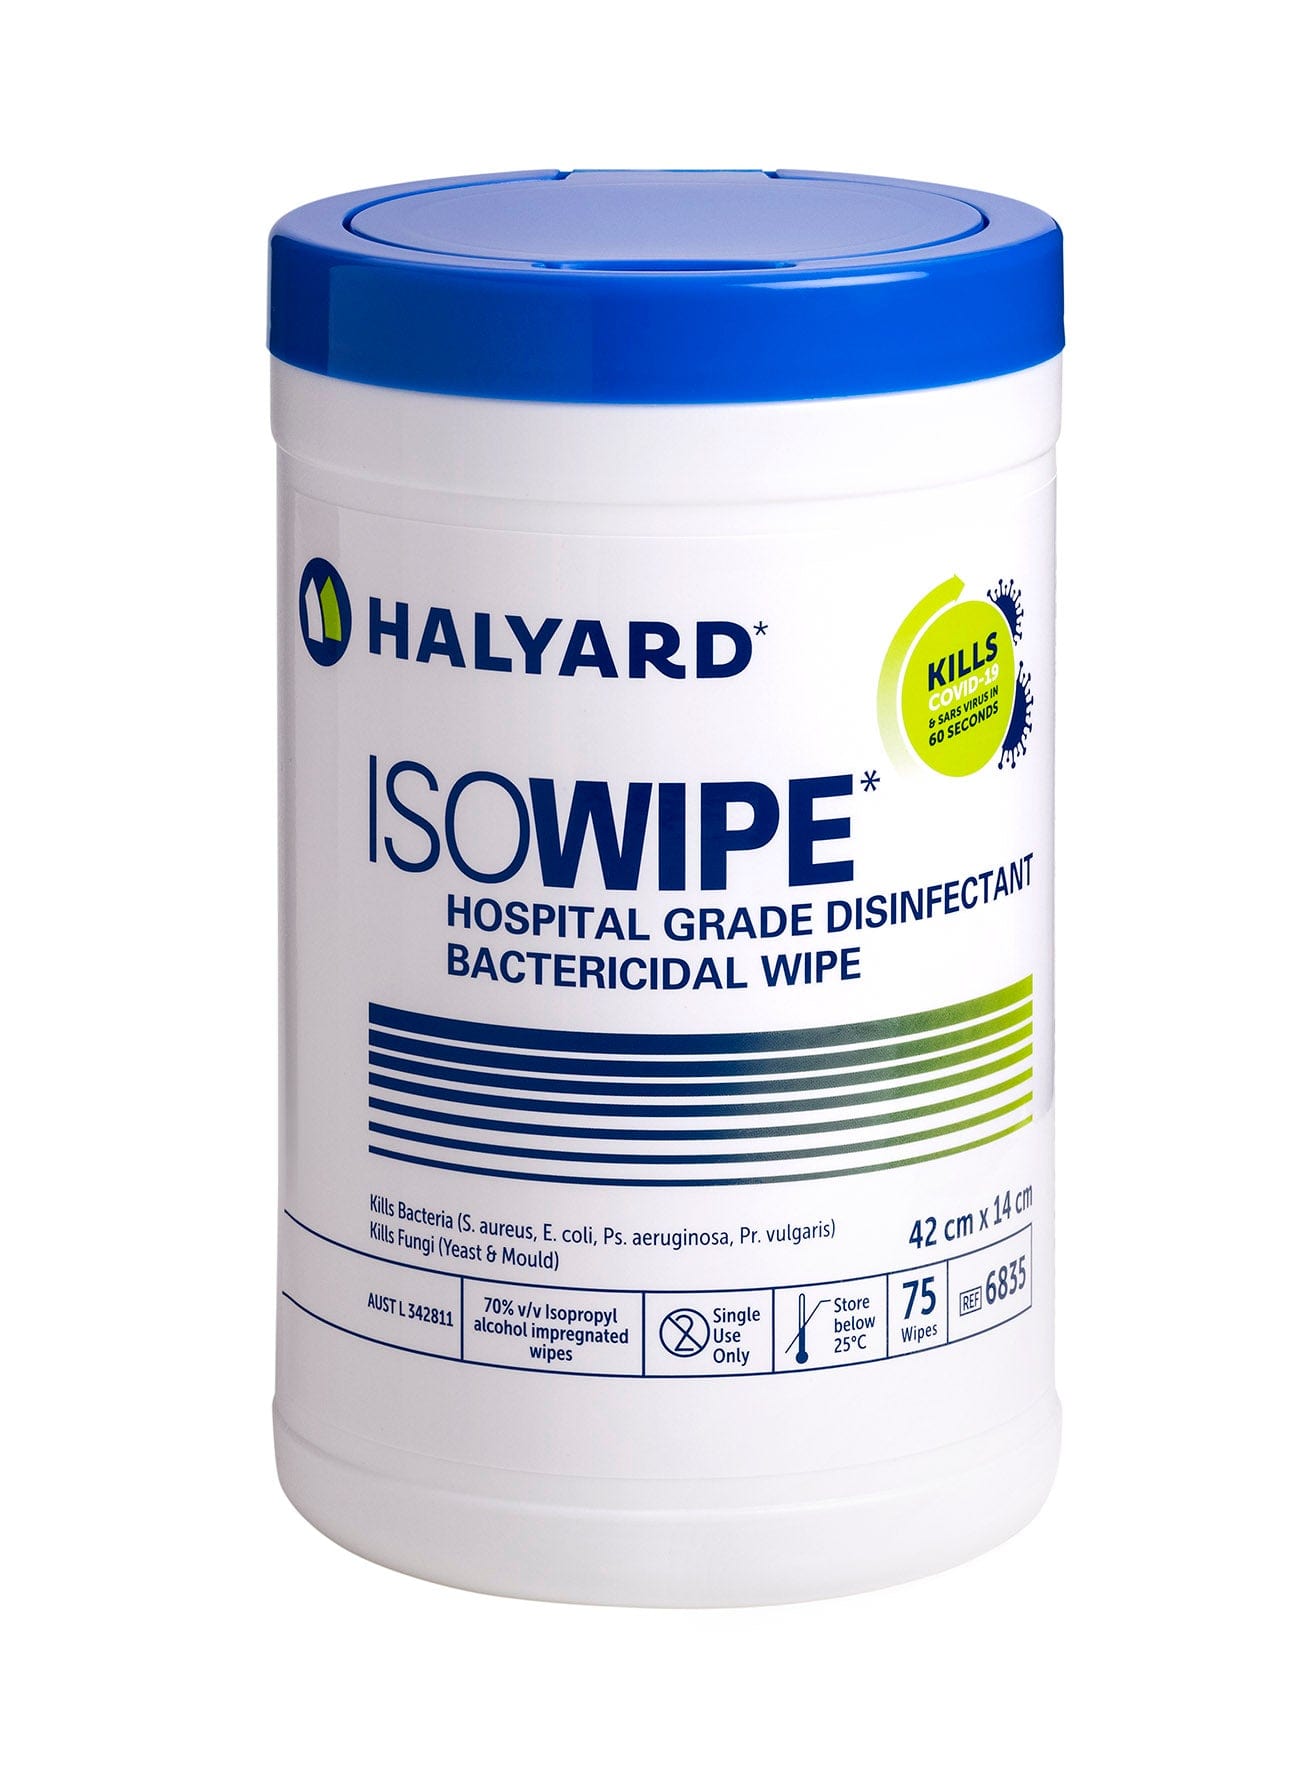 ISOWIPE Bactericidal Wipes